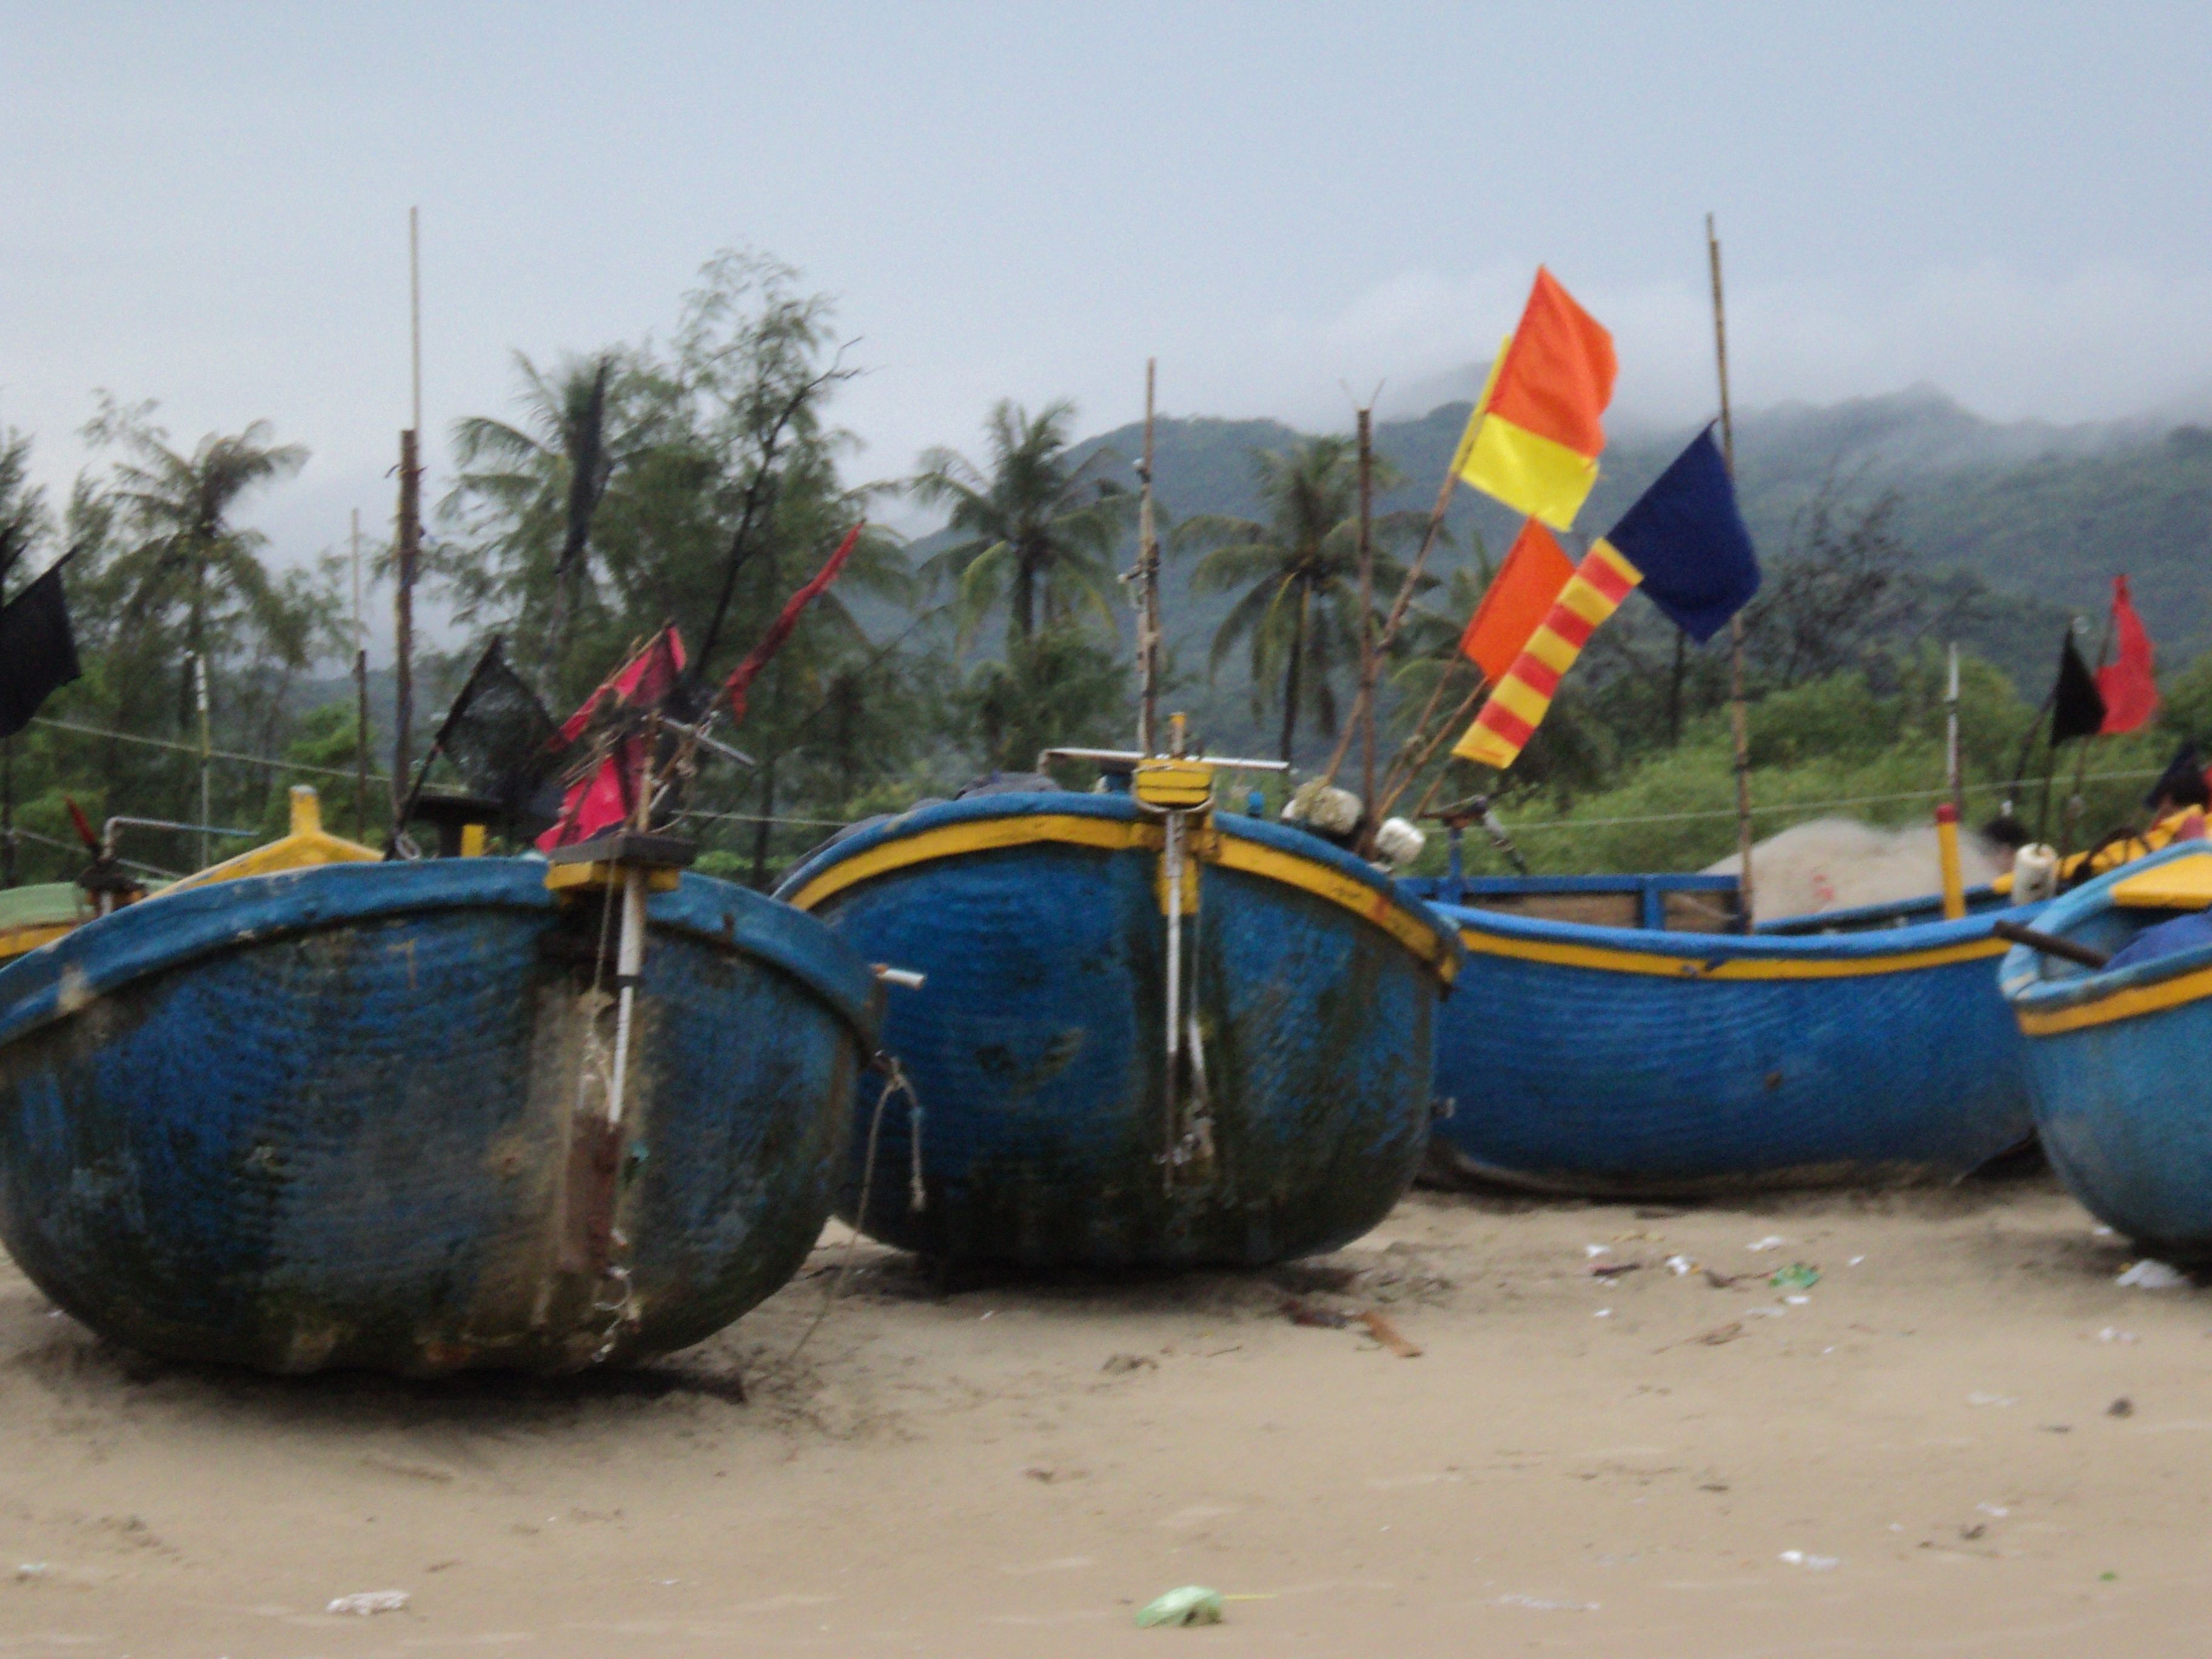 Long Hai Beach

Basket fishing boats.